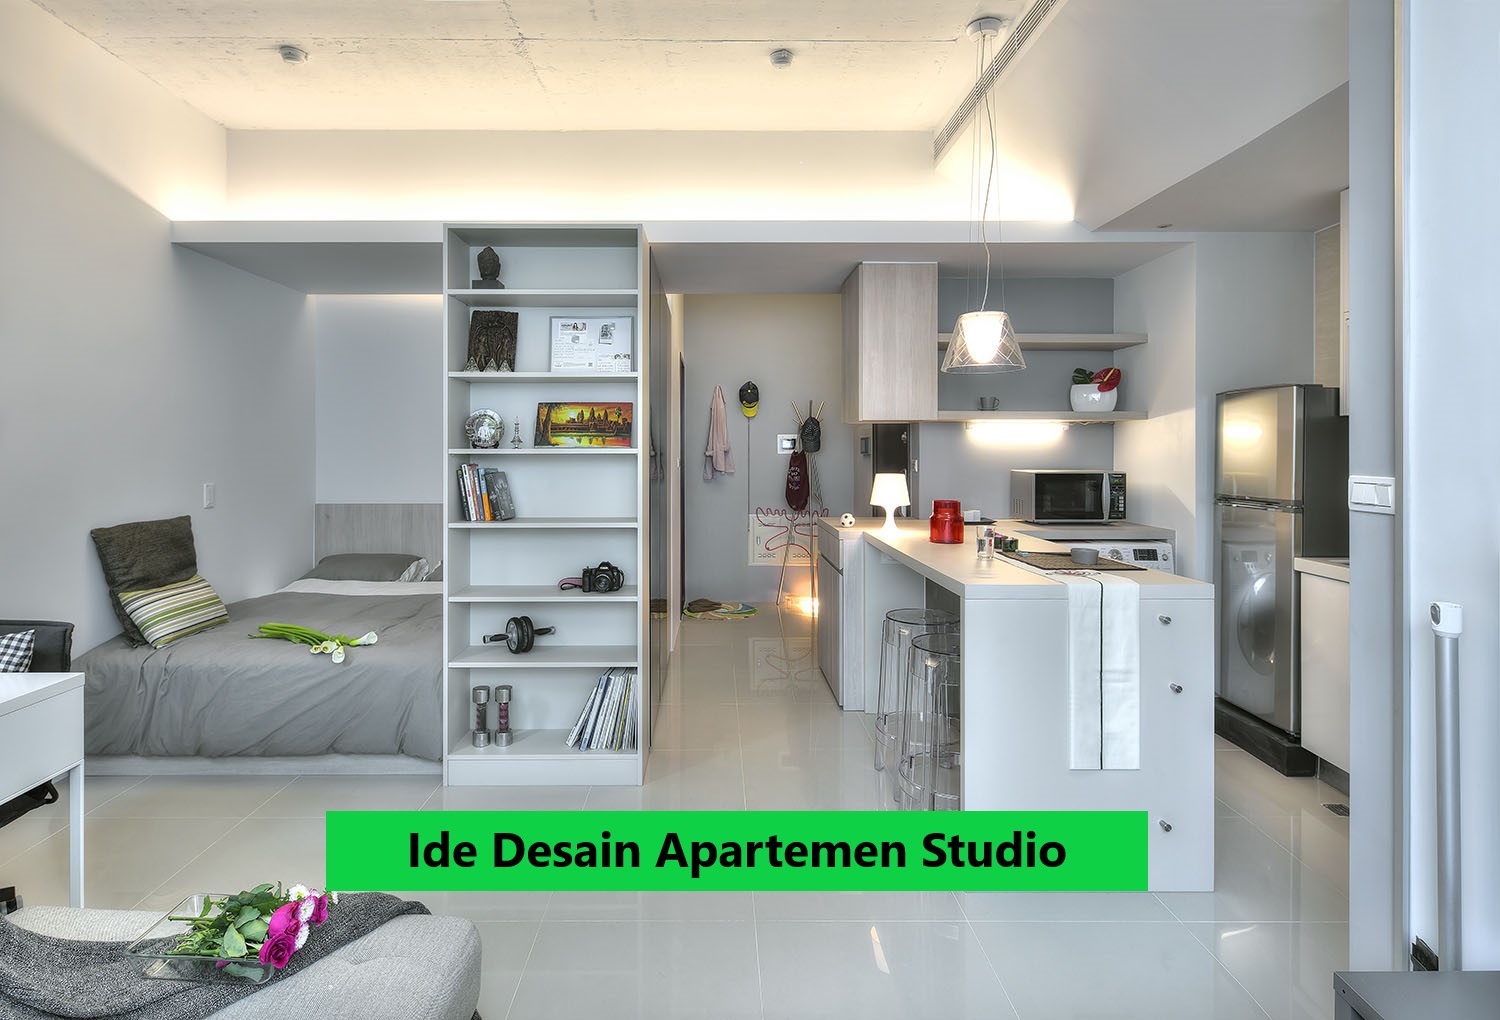 Ide Desain Apartemen Studio